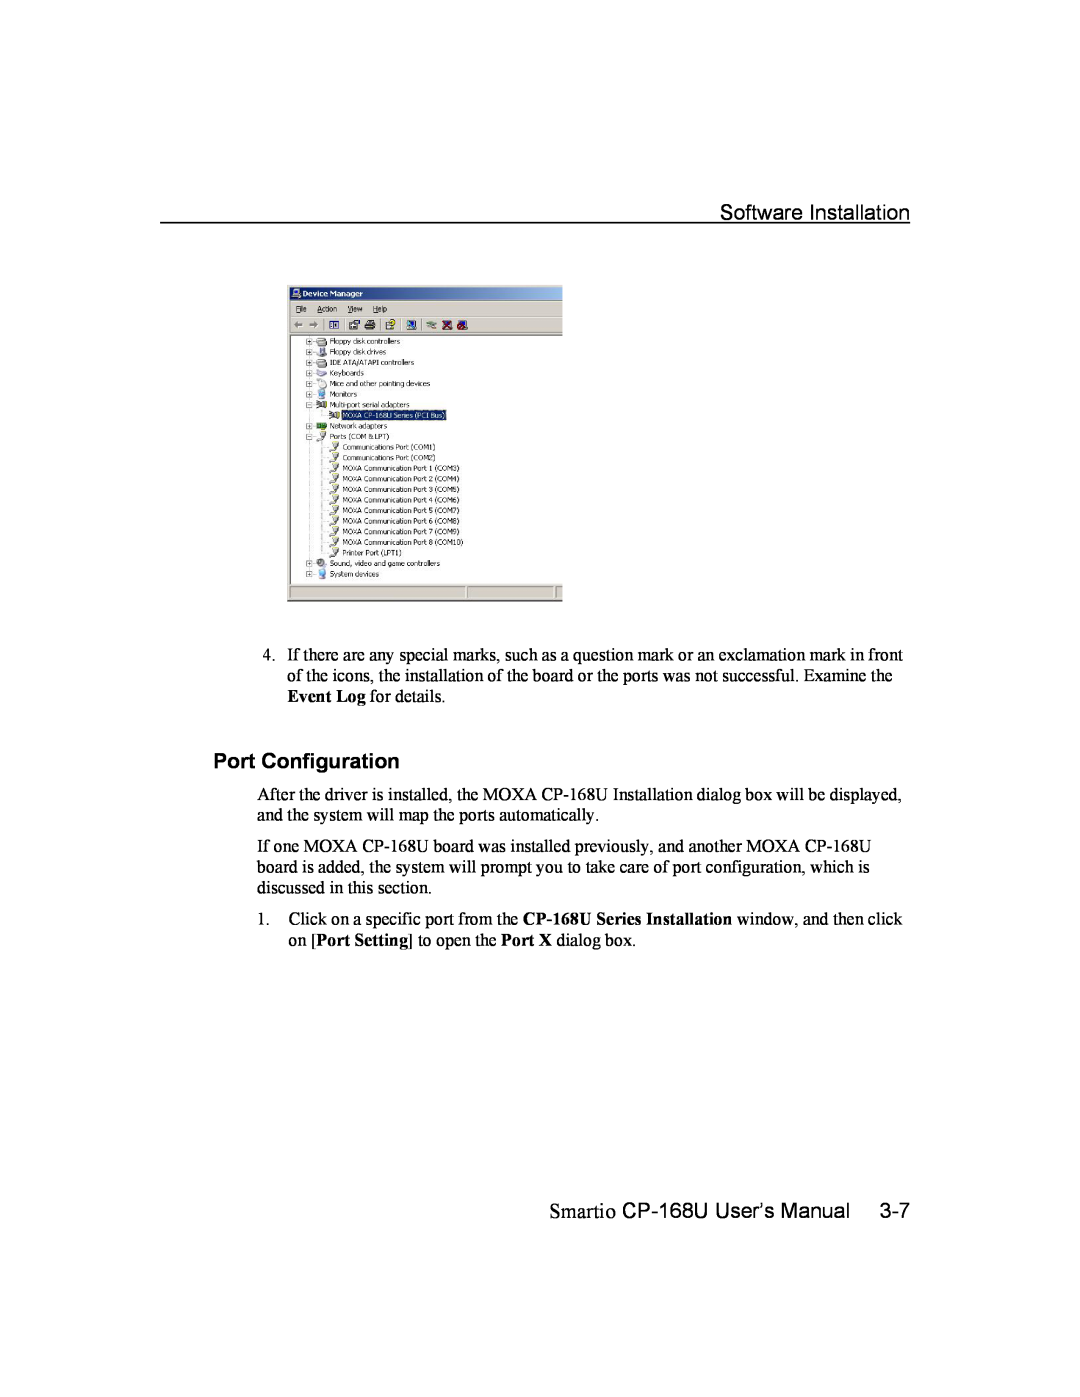 Moxa Technologies user manual Software Installation, Port Configuration, Smartio CP-168U User’s Manual 